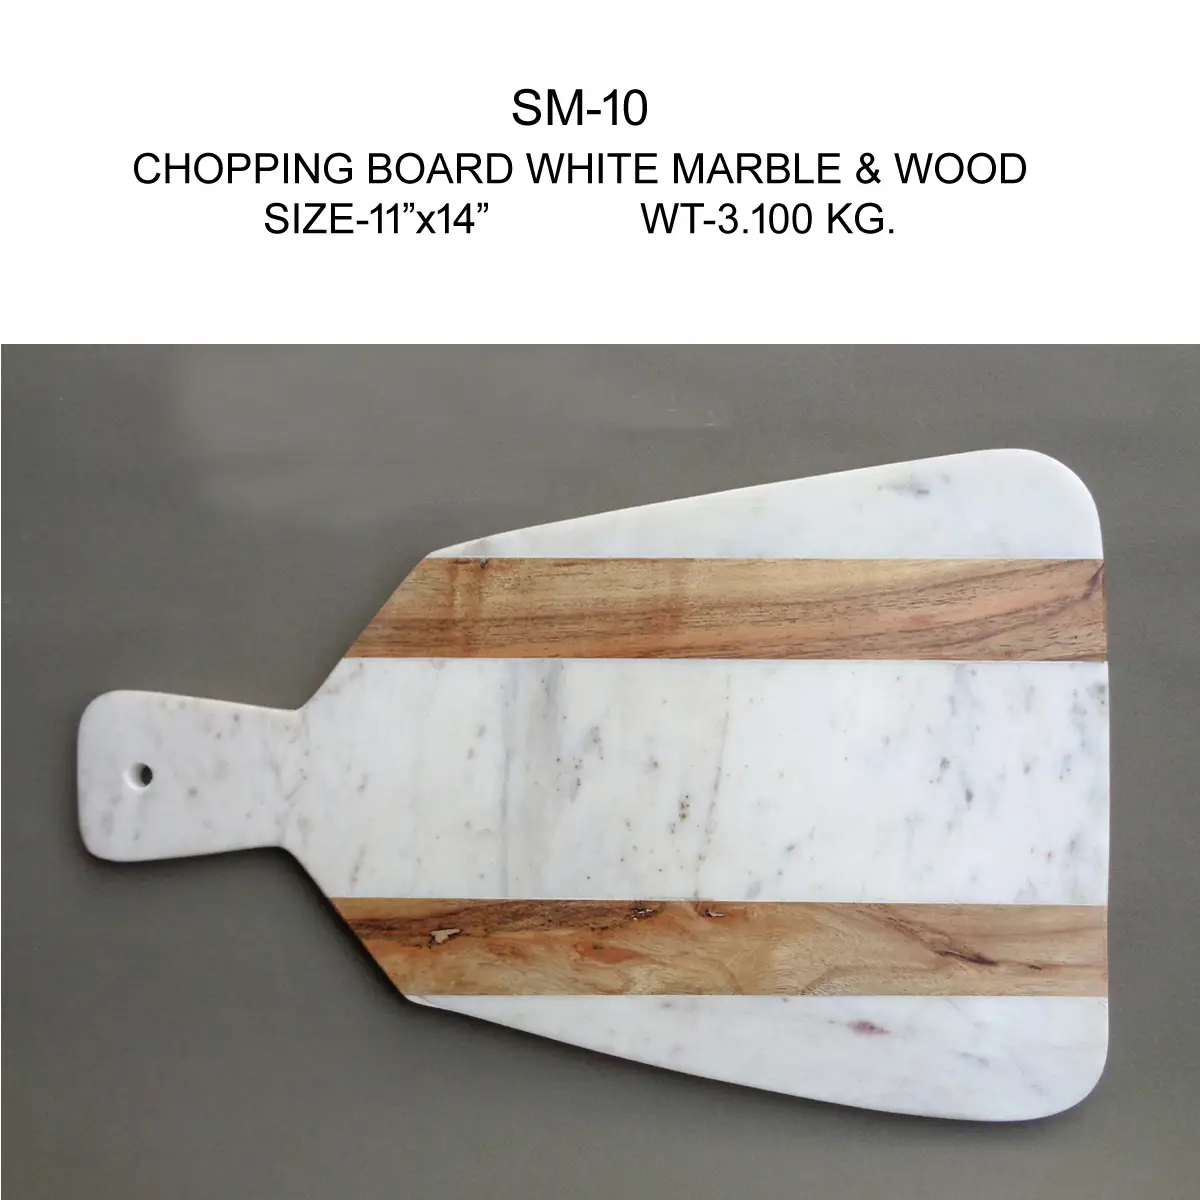 CHOPPING BOARD WOOD & WHITE MARBLE